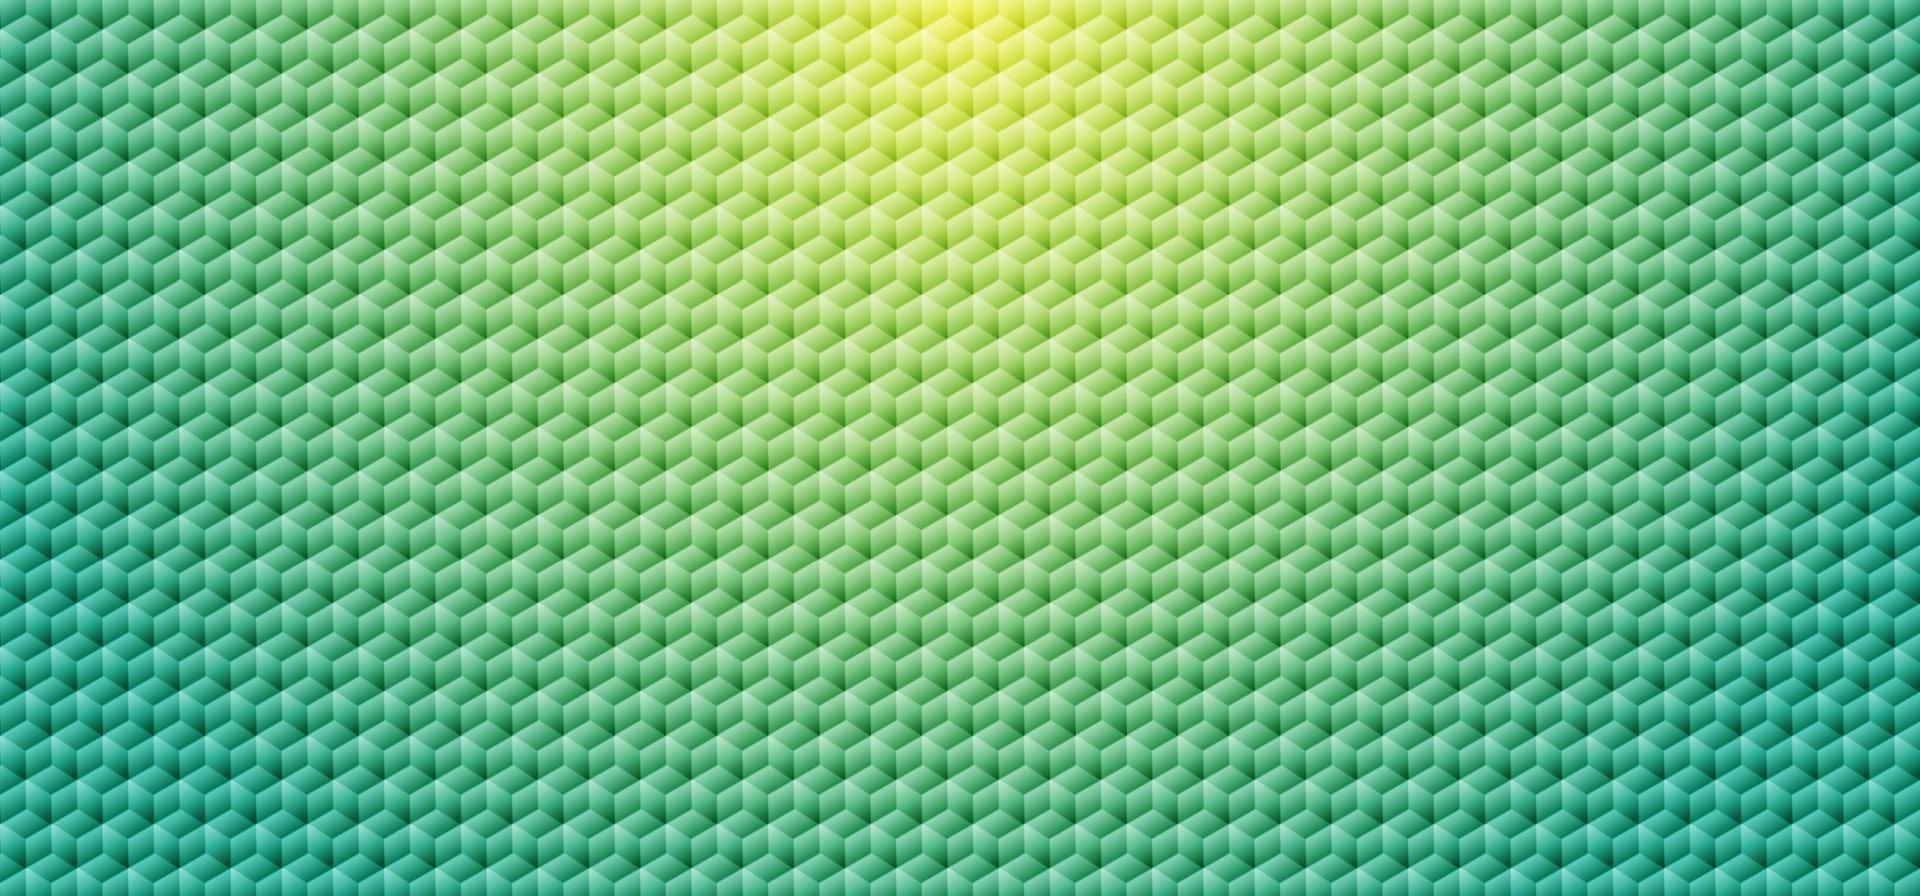 abstrato verde gradiente cor geométrica cubo mosaico de fundo e textura. vetor